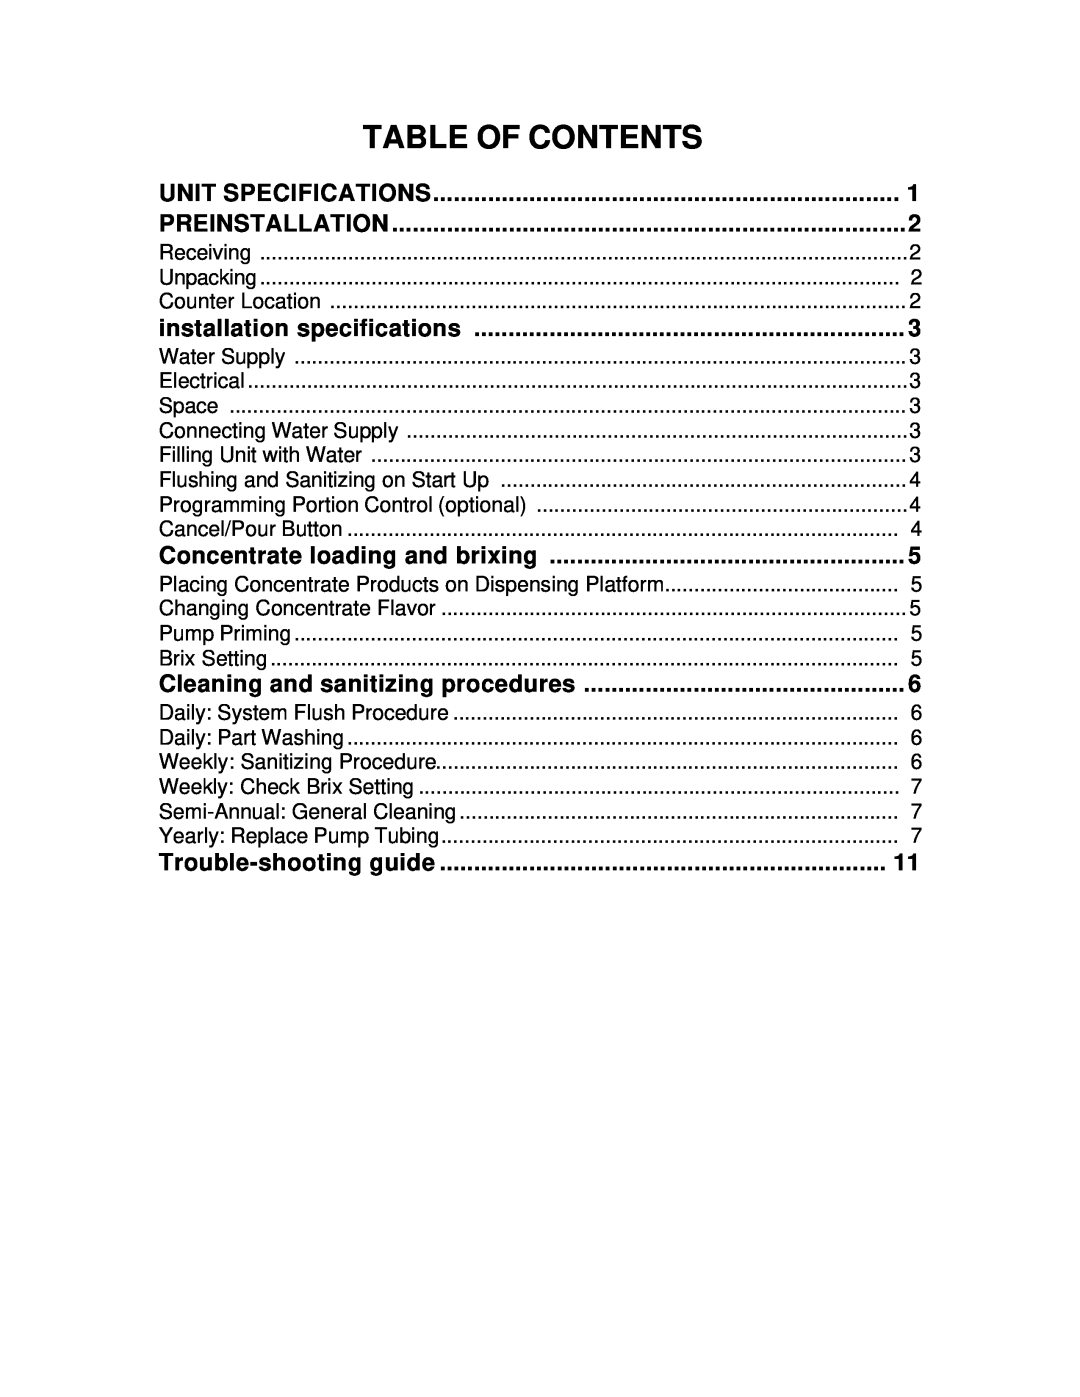 Cornelius QUANTUM SERIES Table Of Contents, Unit Specifications, Preinstallation, installation specifications 